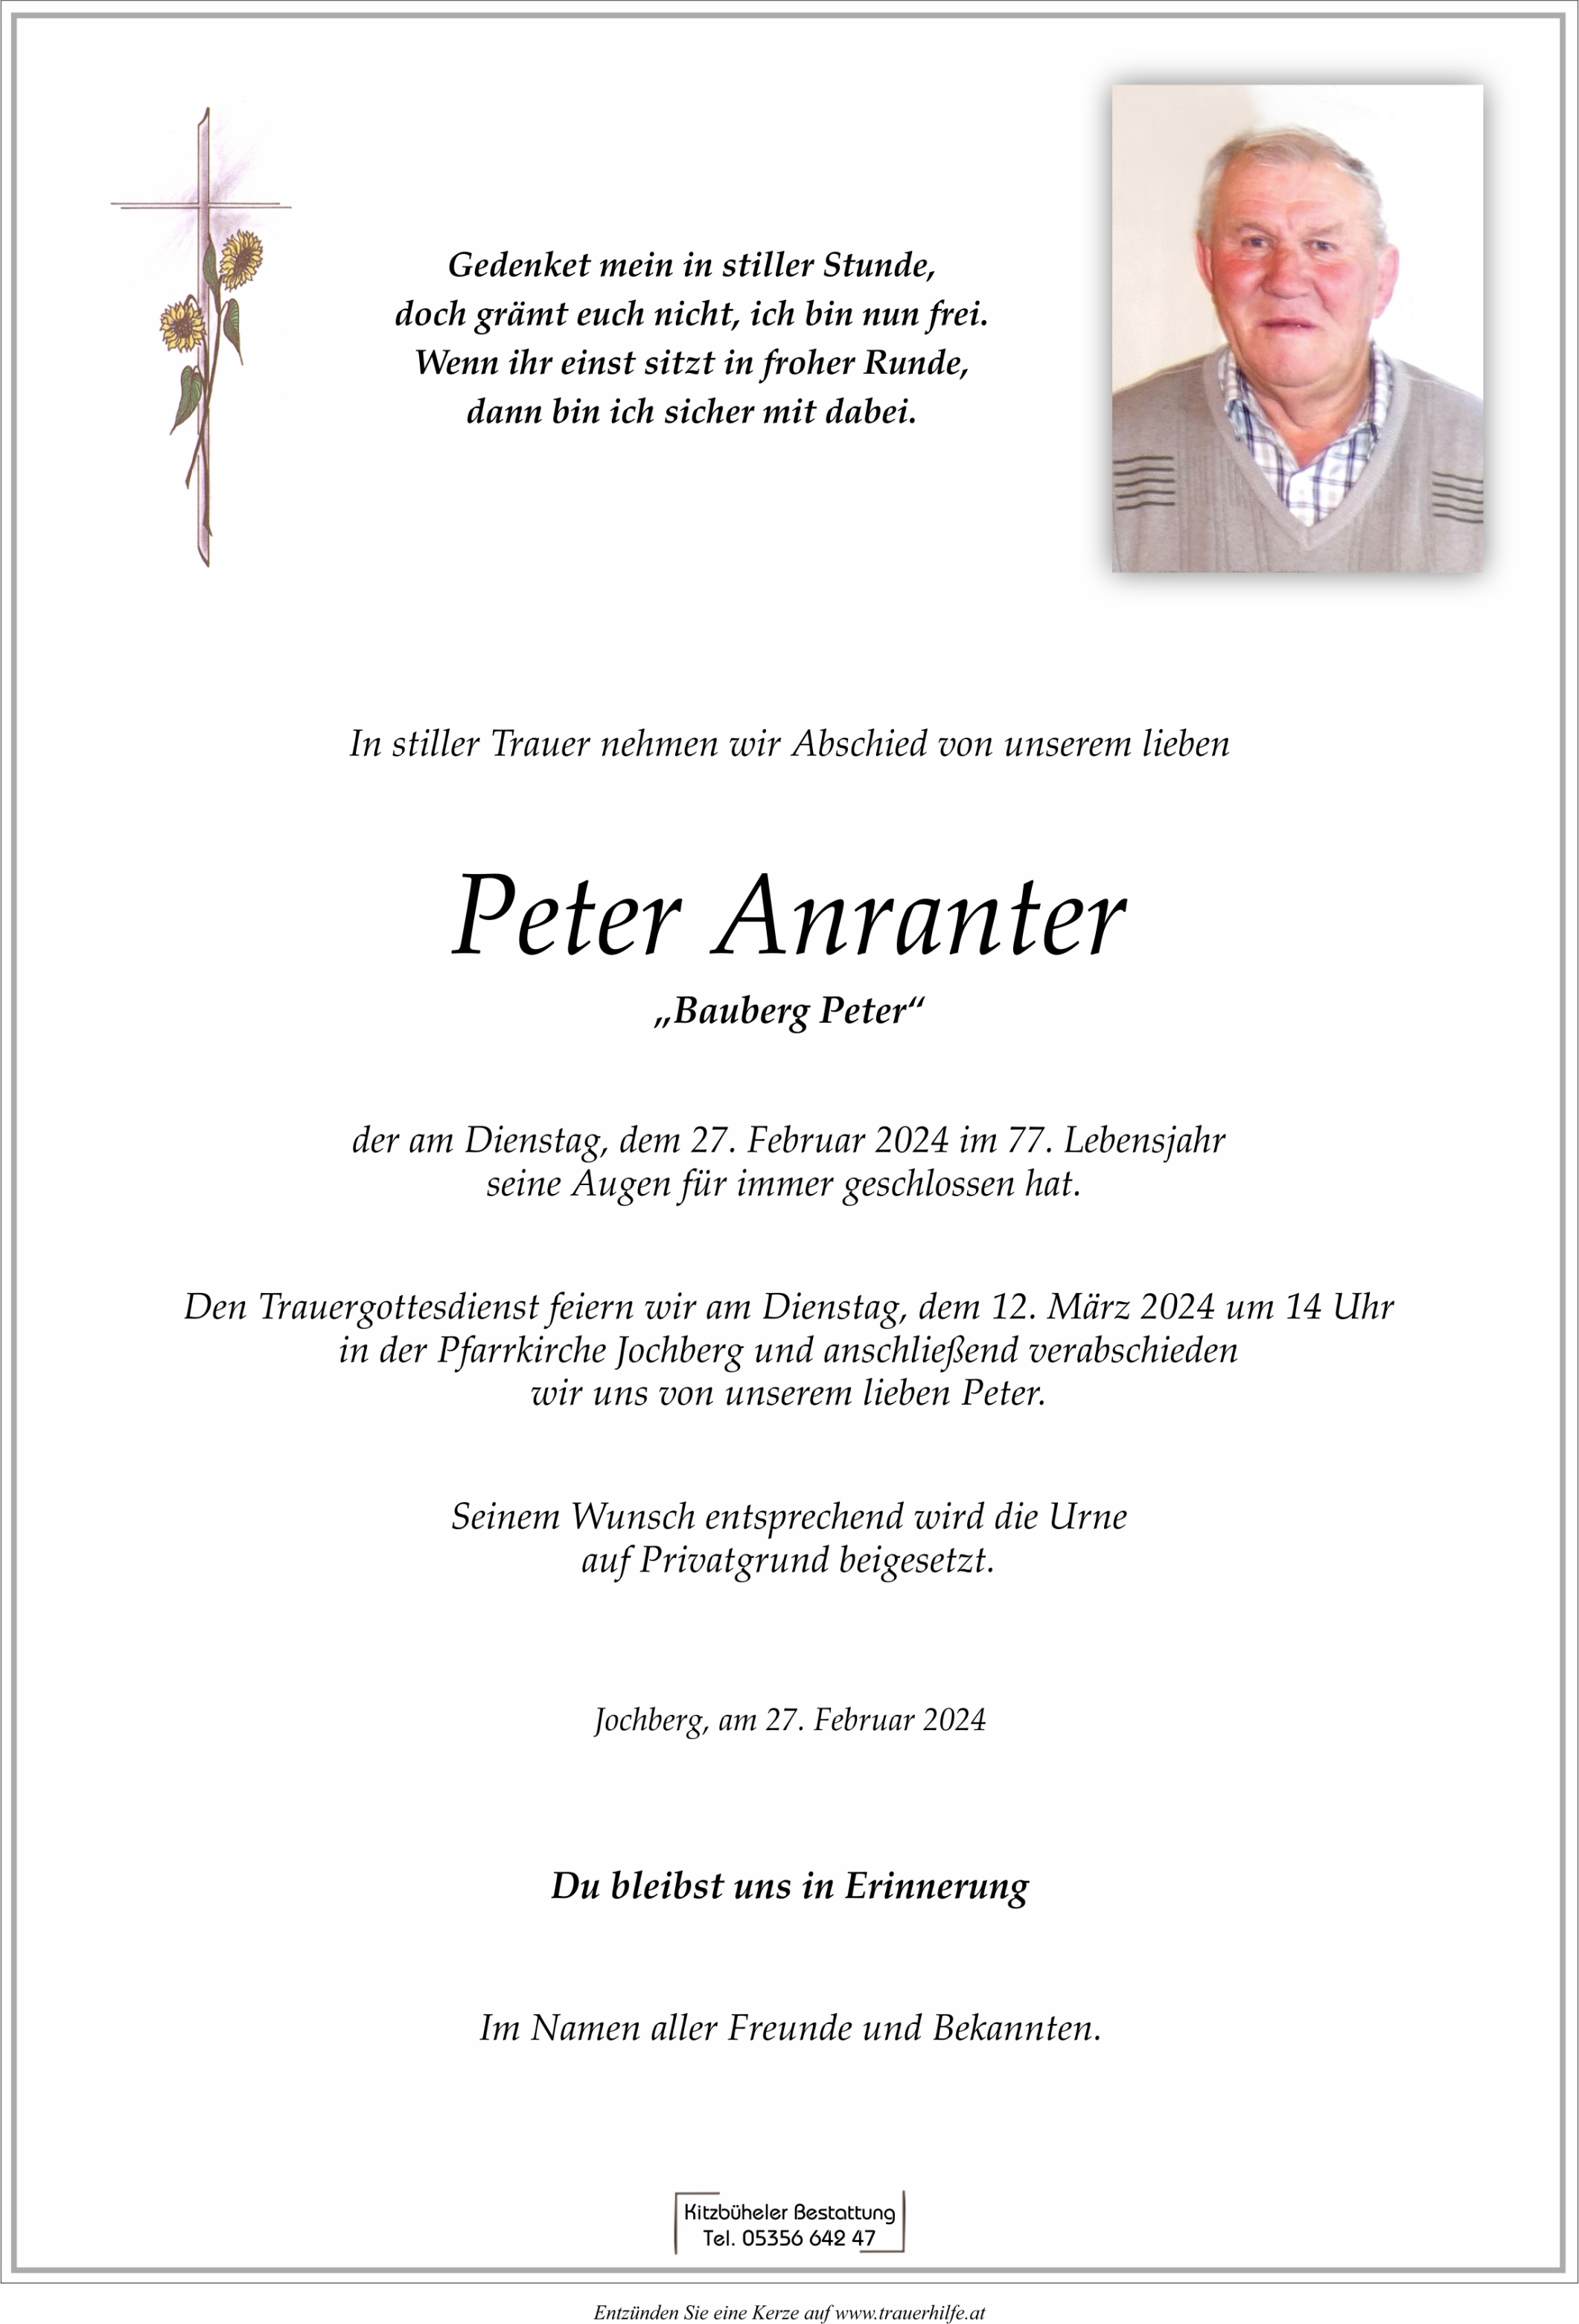 Peter Anranter